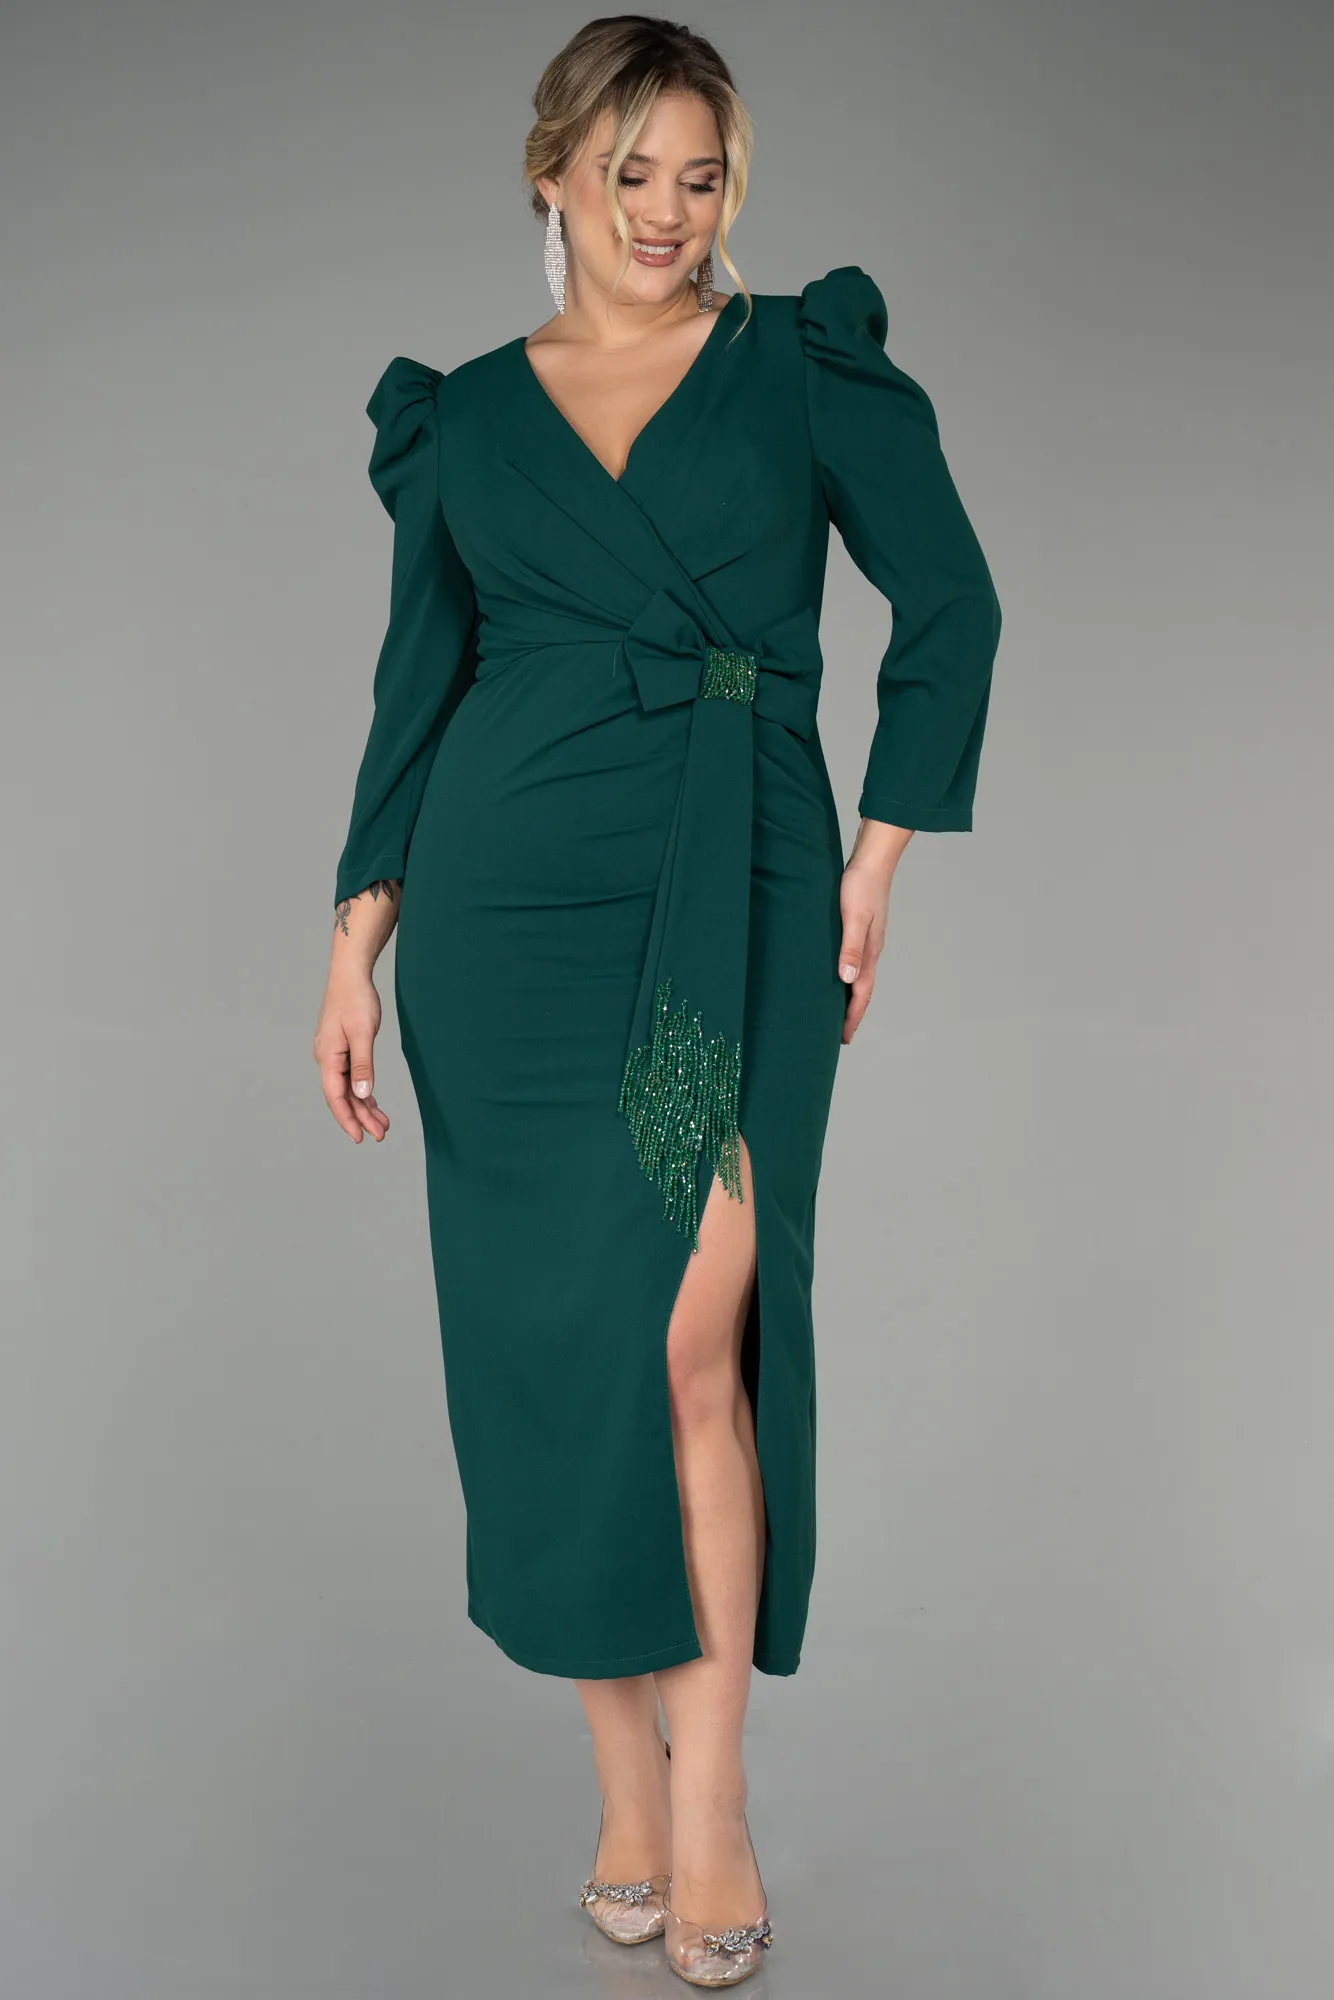 Emerald Green-Midi Plus Size Evening Dress ABK1822